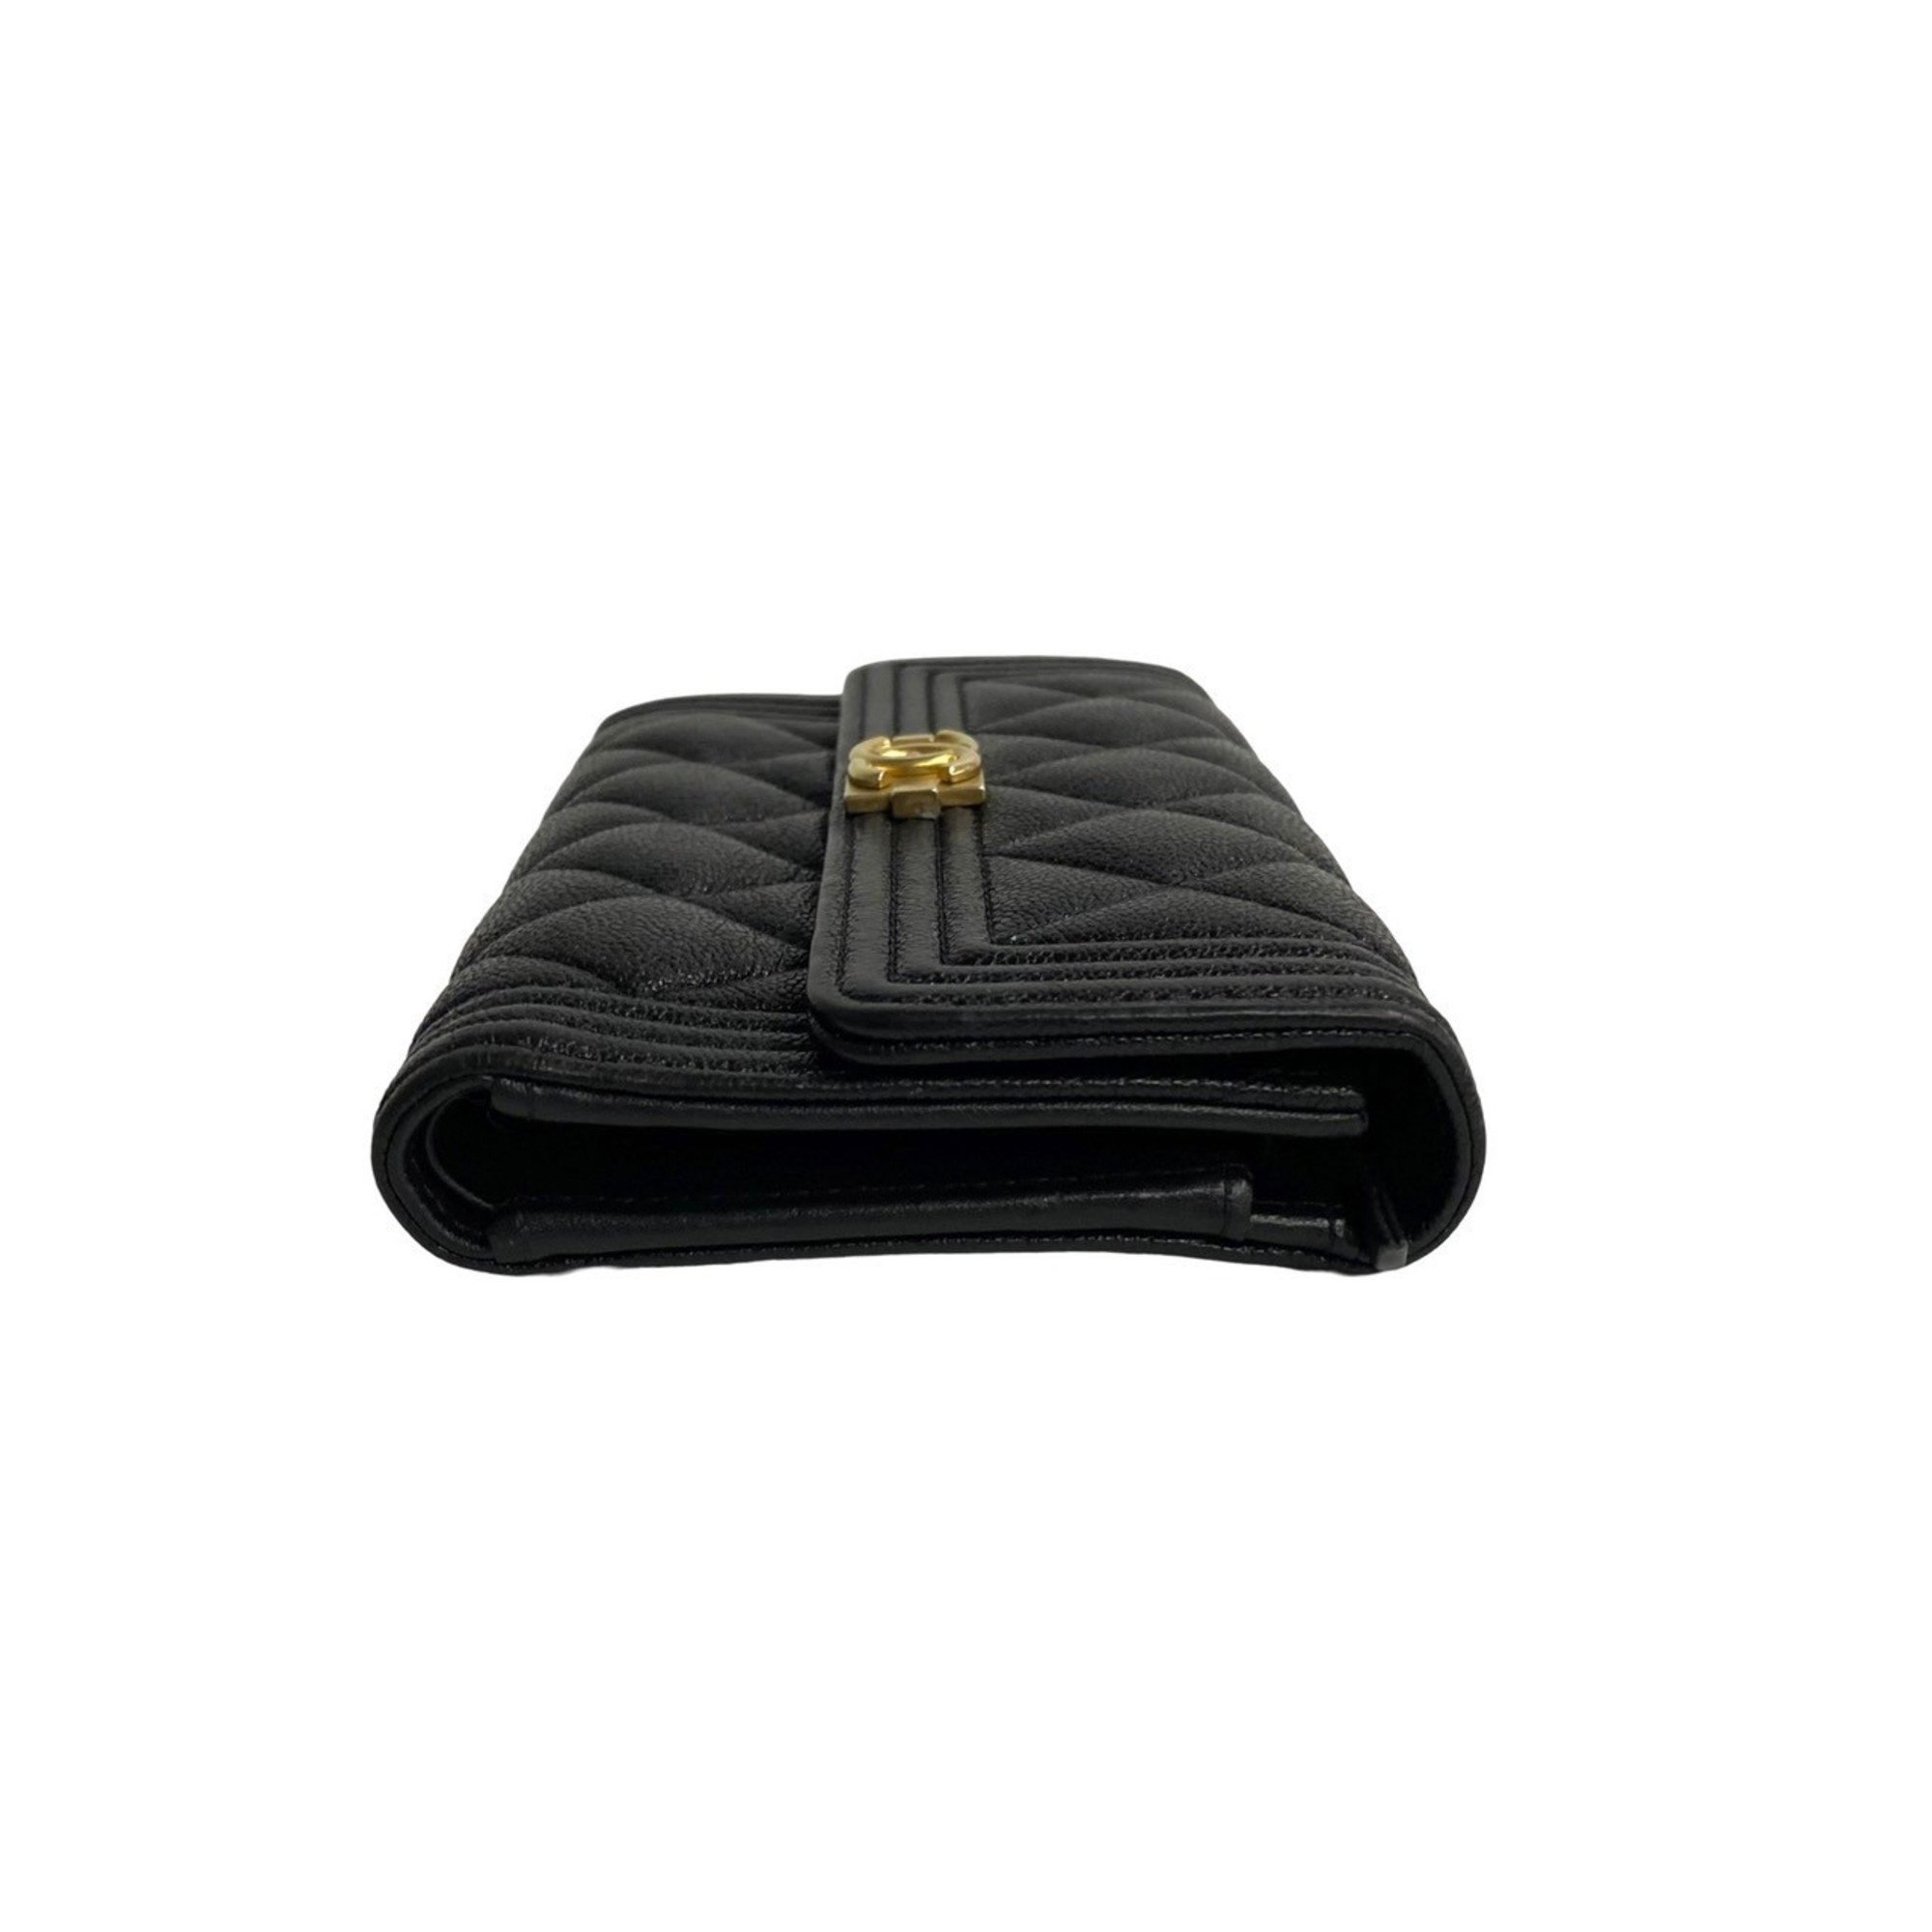 CHANEL Boy Chanel Matelasse Caviar Skin Leather Bi-fold Wallet 90506